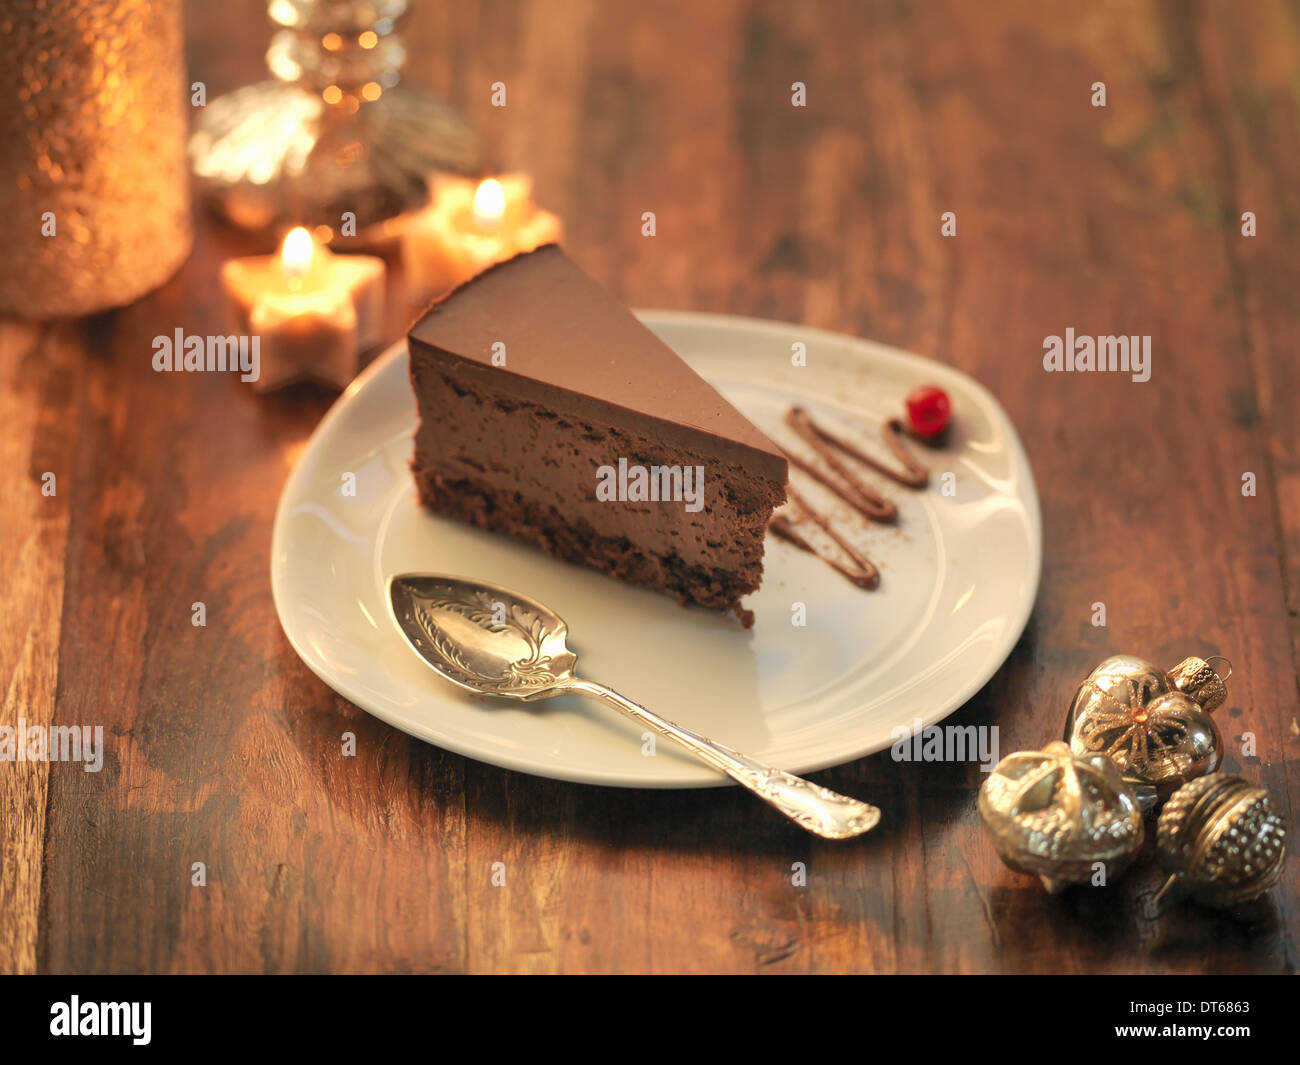 Chocolate and chestnut torte amongst festive decorations Stock Photo